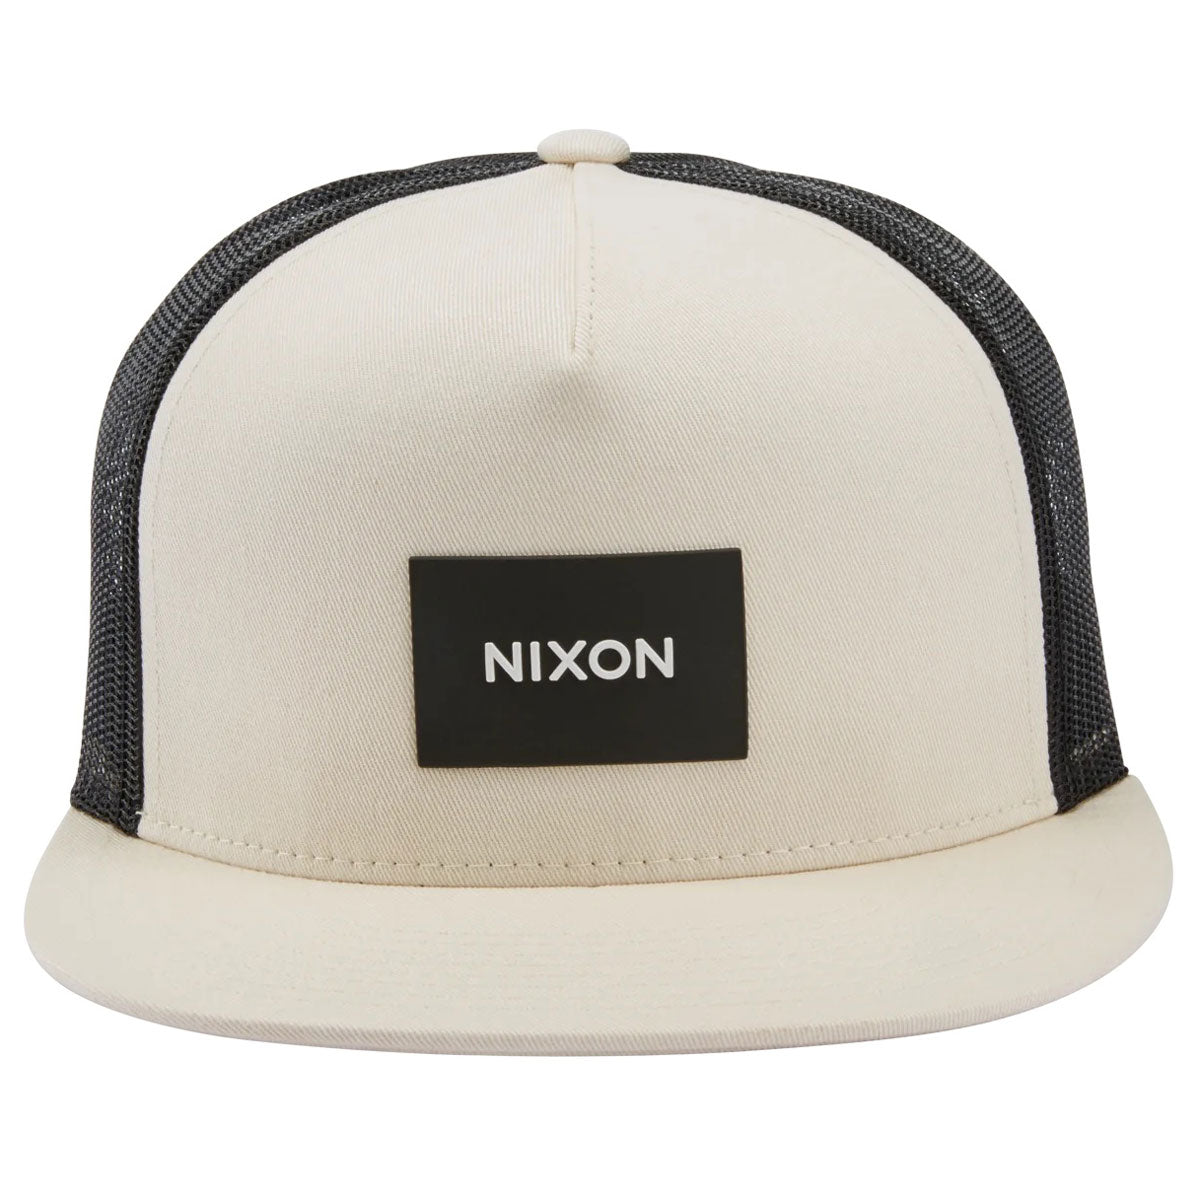 Nixon Team Trucker Hat - Cream/Black image 3